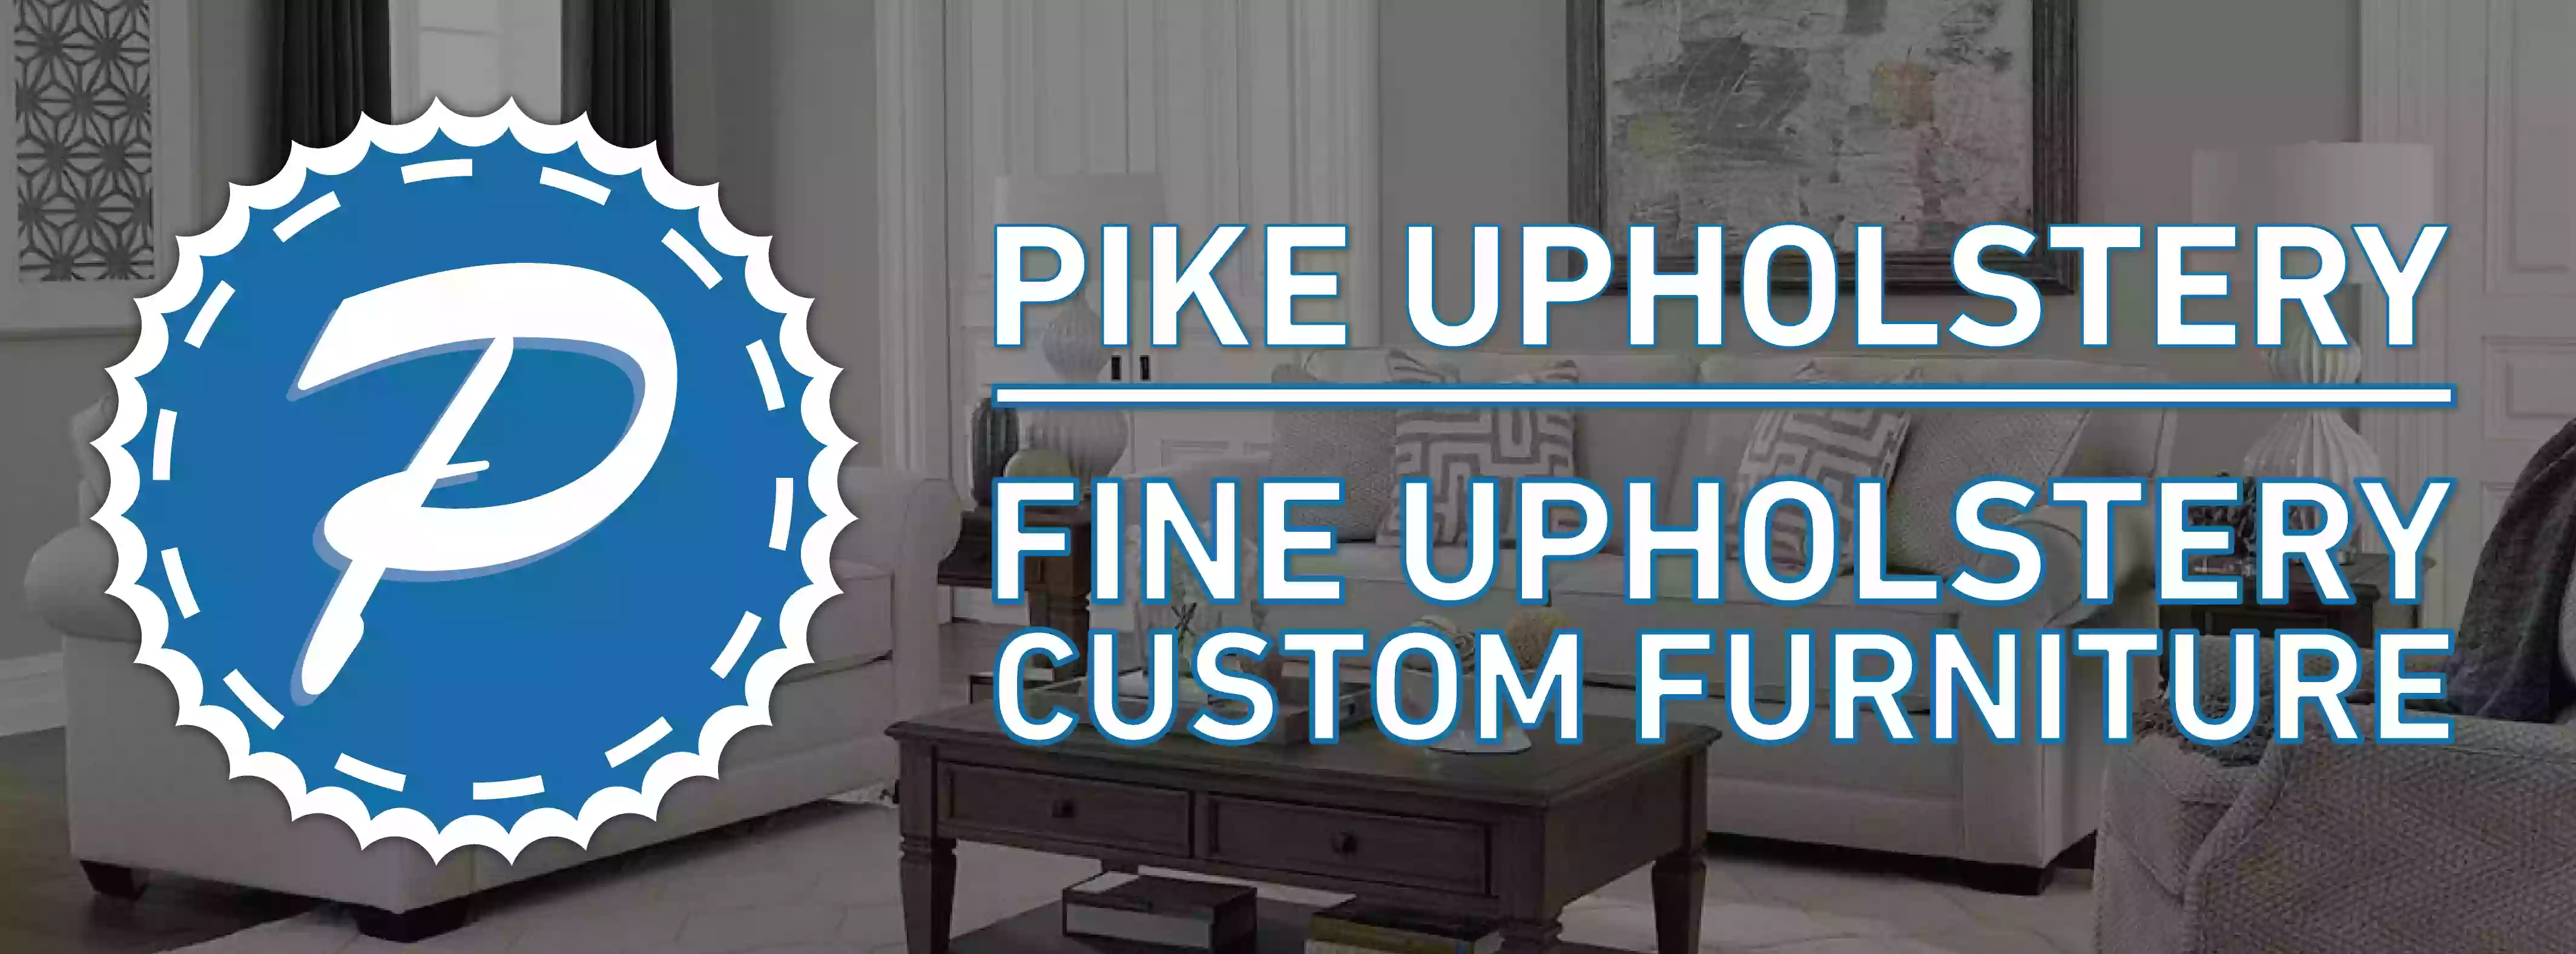 Pike Upholstery Inc